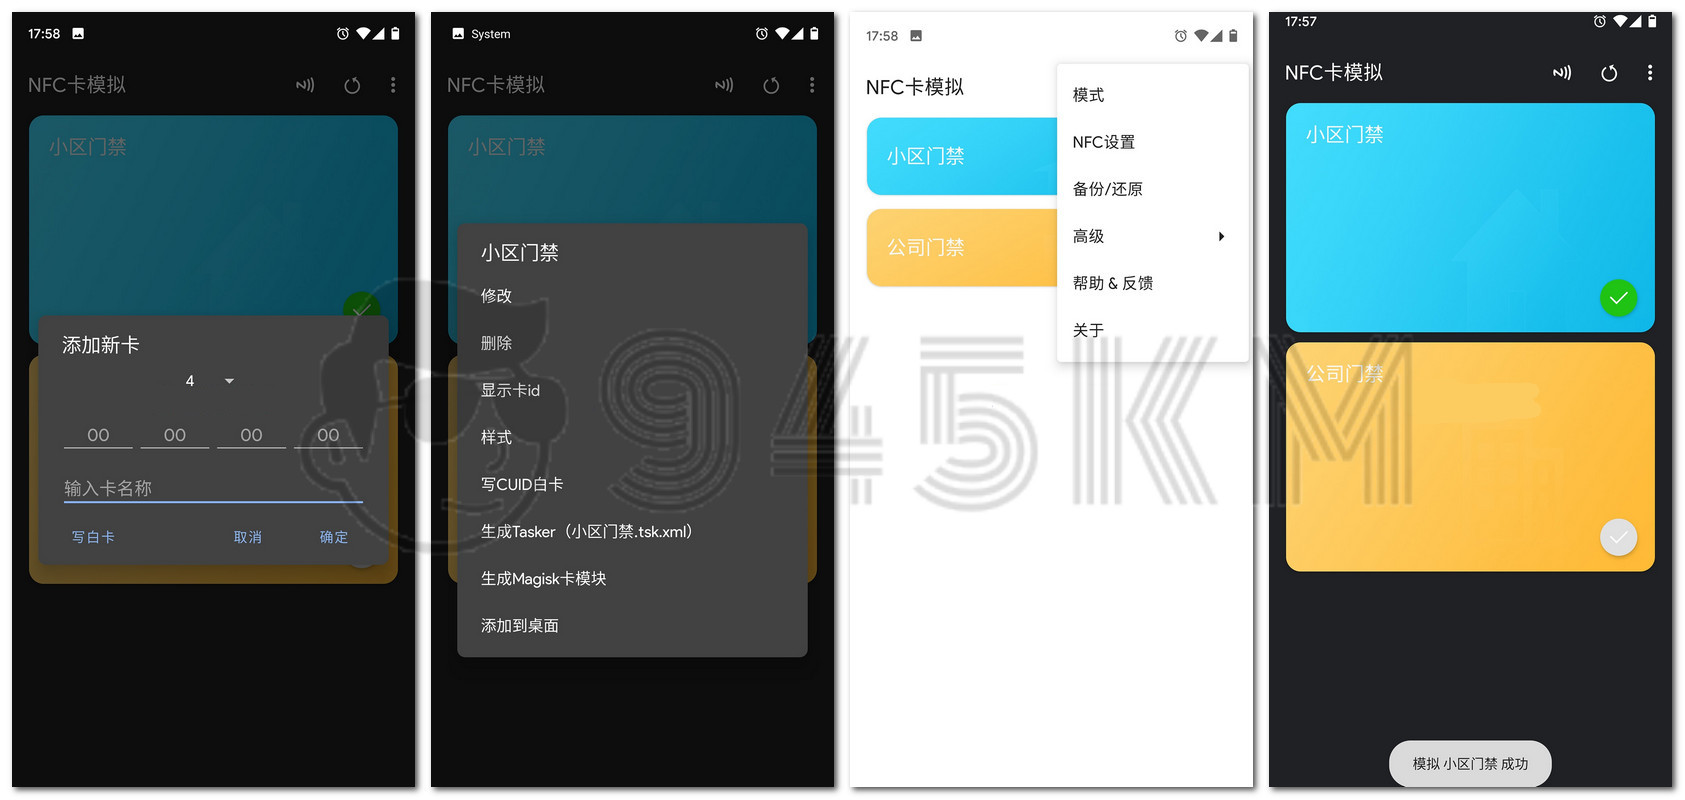 【Android】Card Emulator Pro v8.1.0  NFC卡模拟、专业版插图